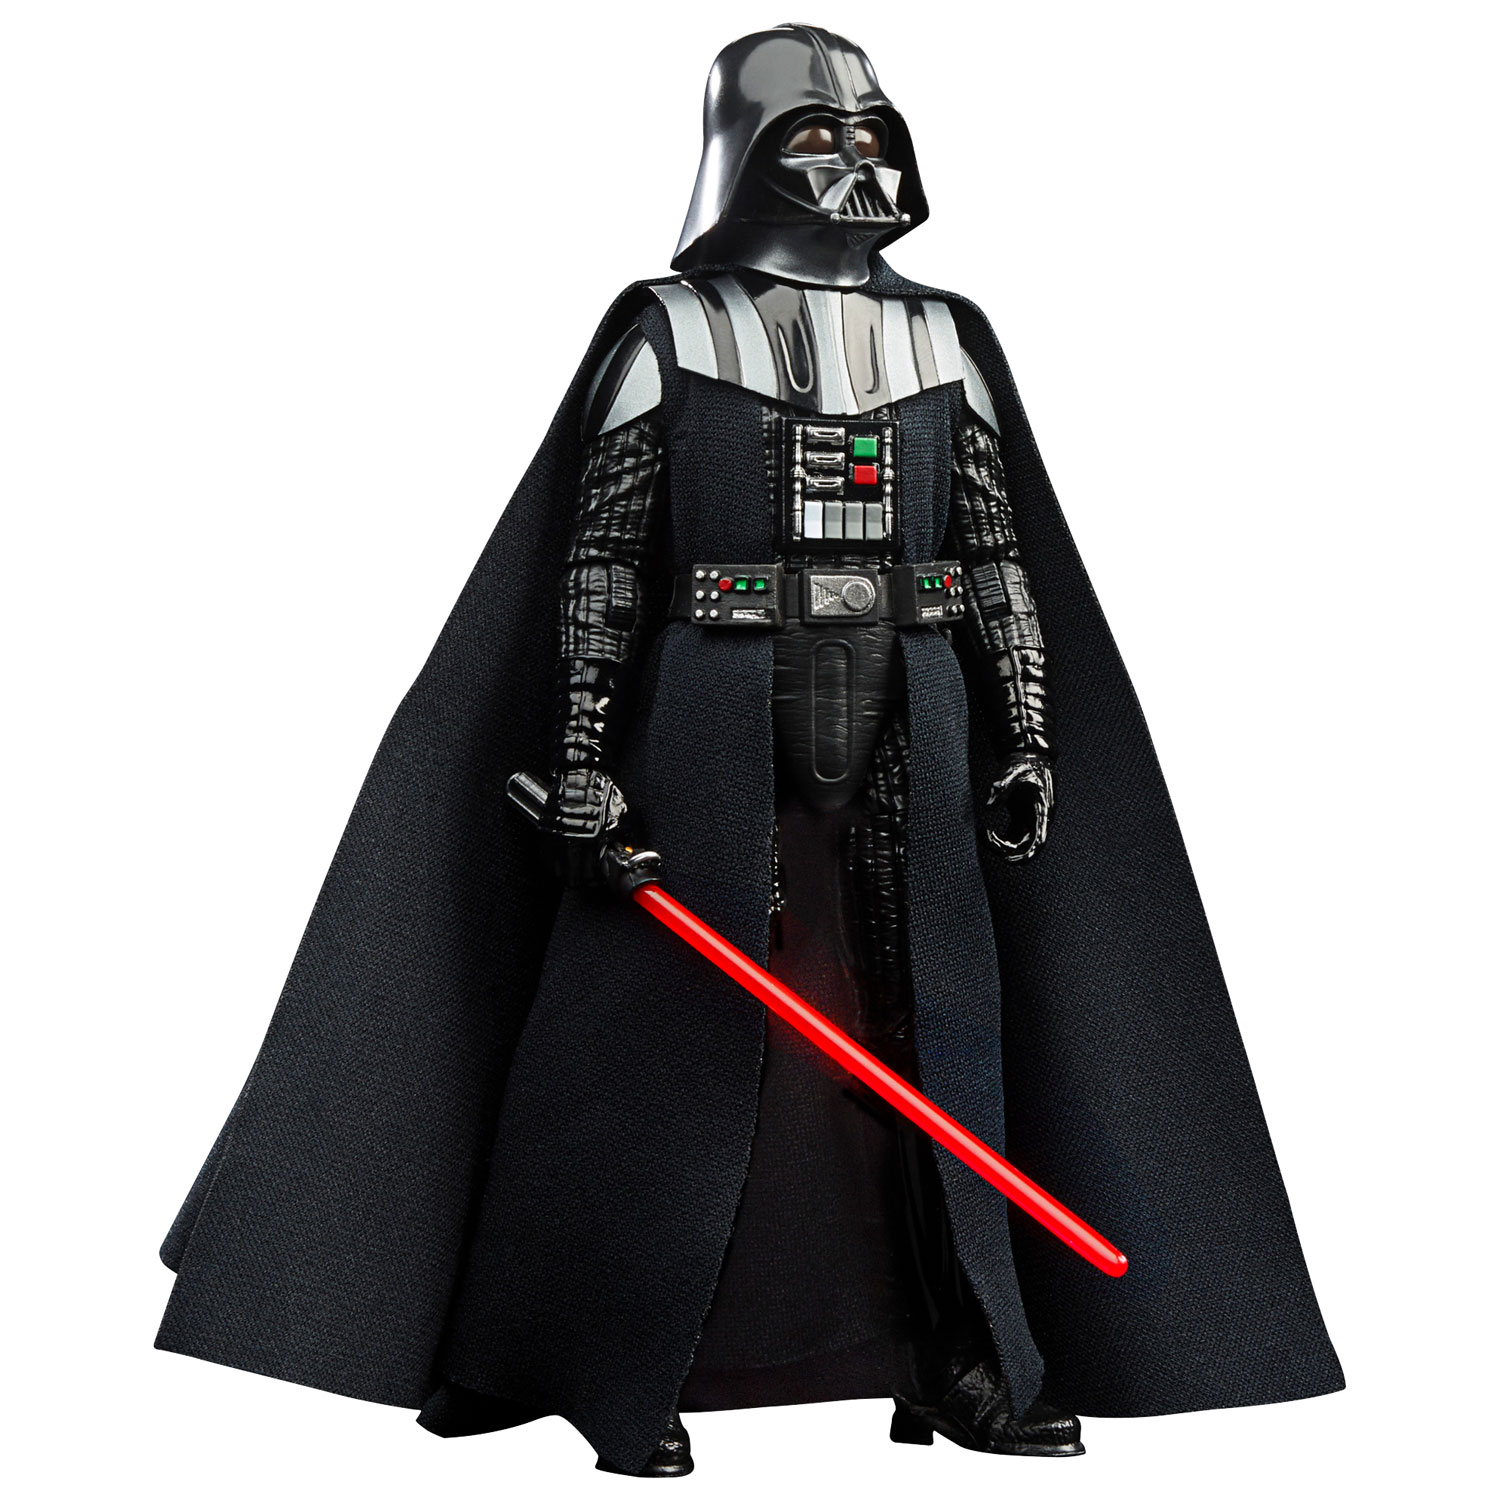 Star Wars The Black Series - Darth Vader Action Figure